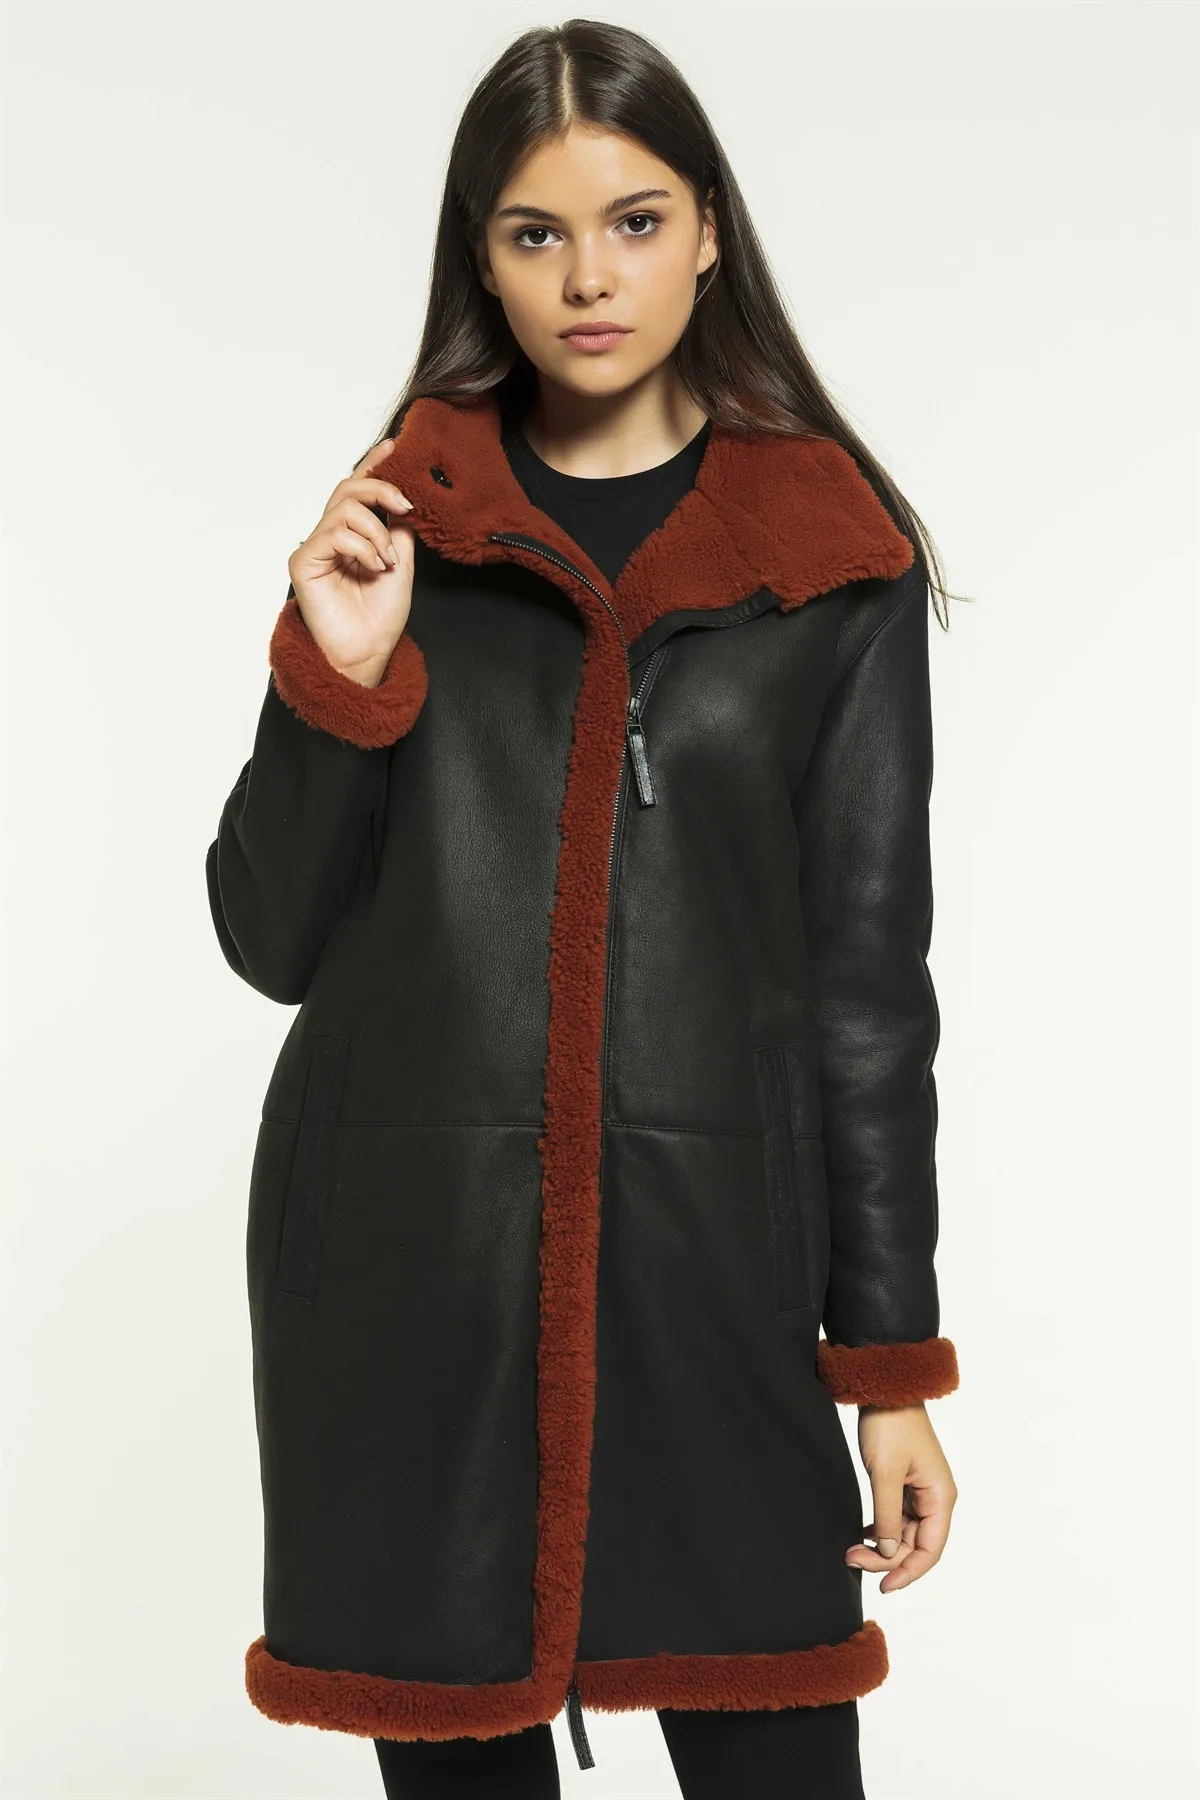 Enlarge Women Winter Coats Genuine Sheepskin Jackets Long Soft Parka Turkiyede Produced New Street Fashion Keeps you Warm